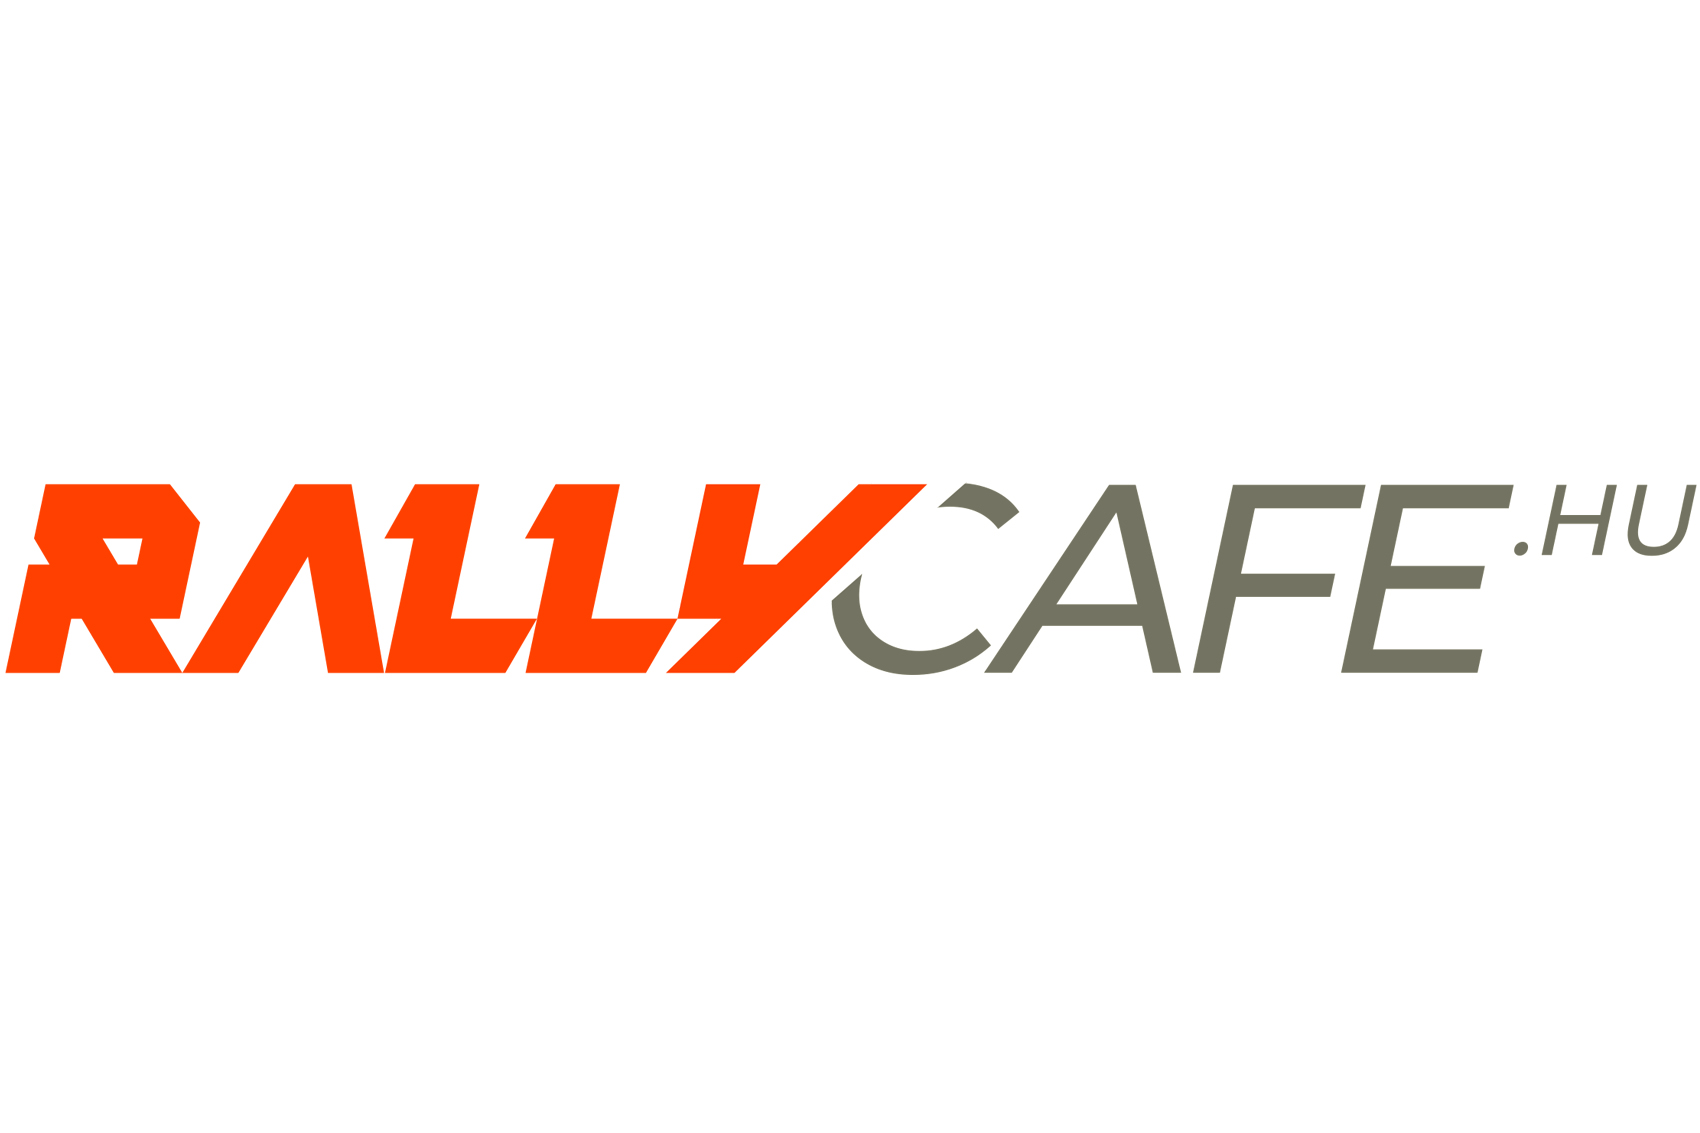 Rally Cafe